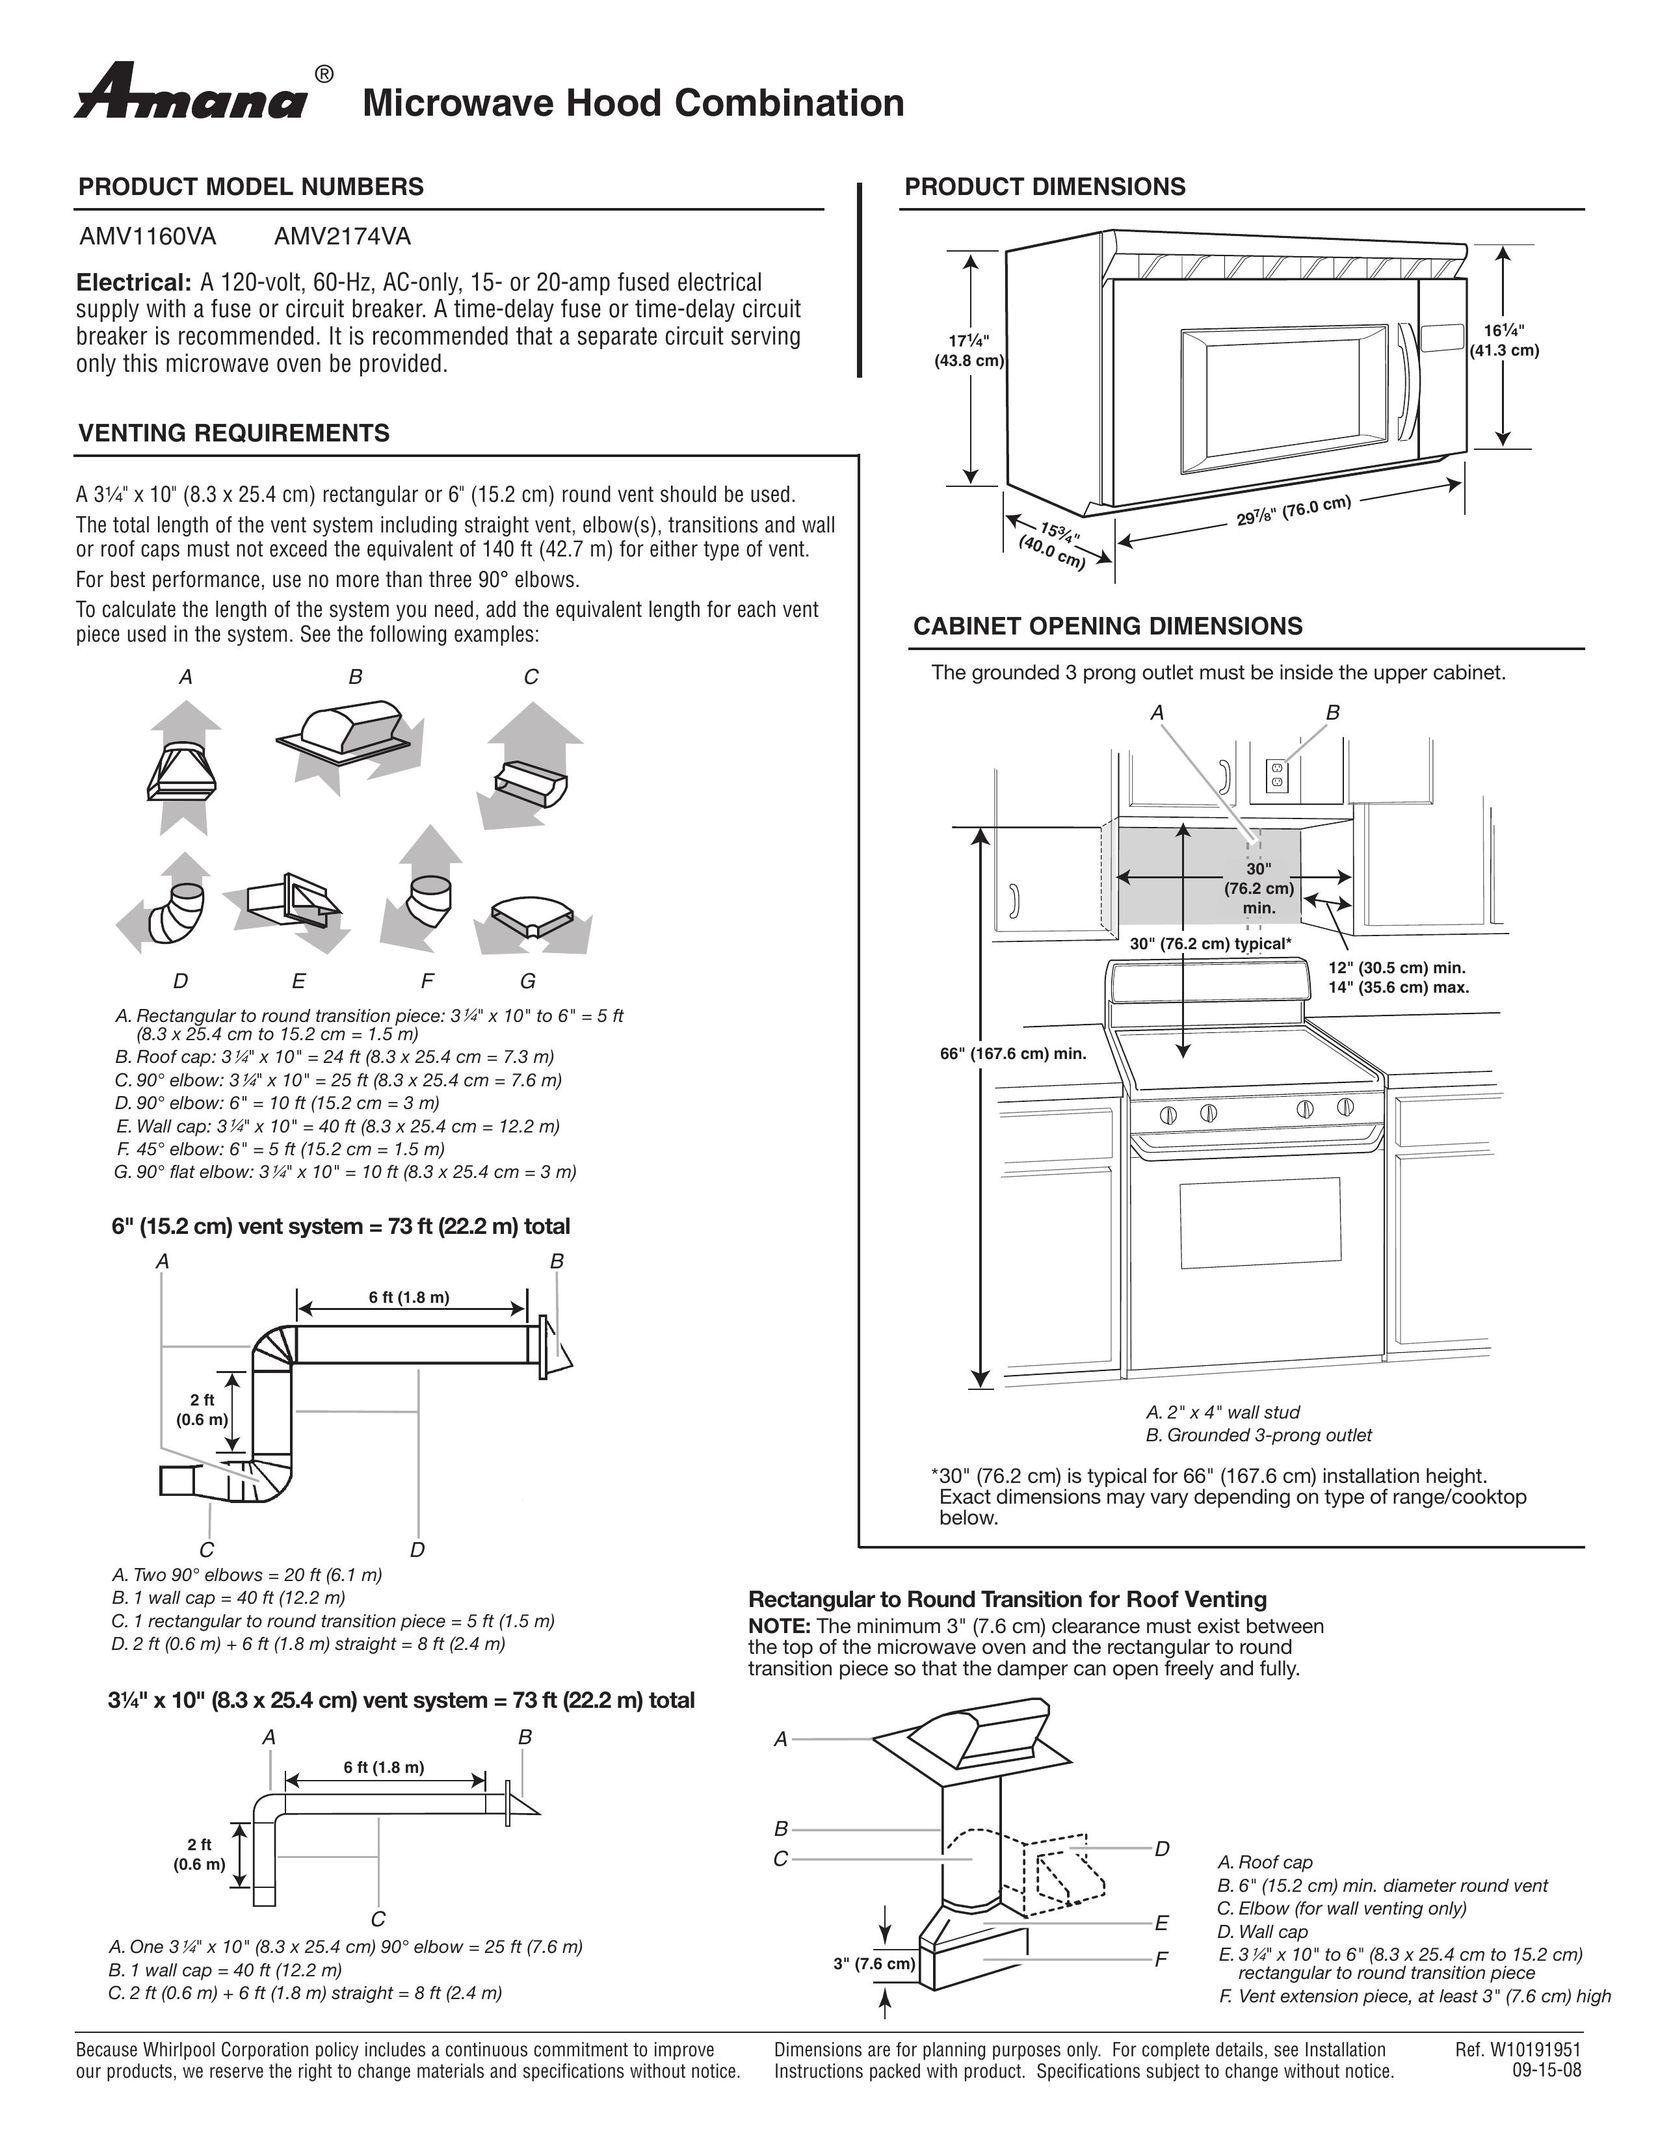 Amana AMV1160VA Microwave Oven User Manual